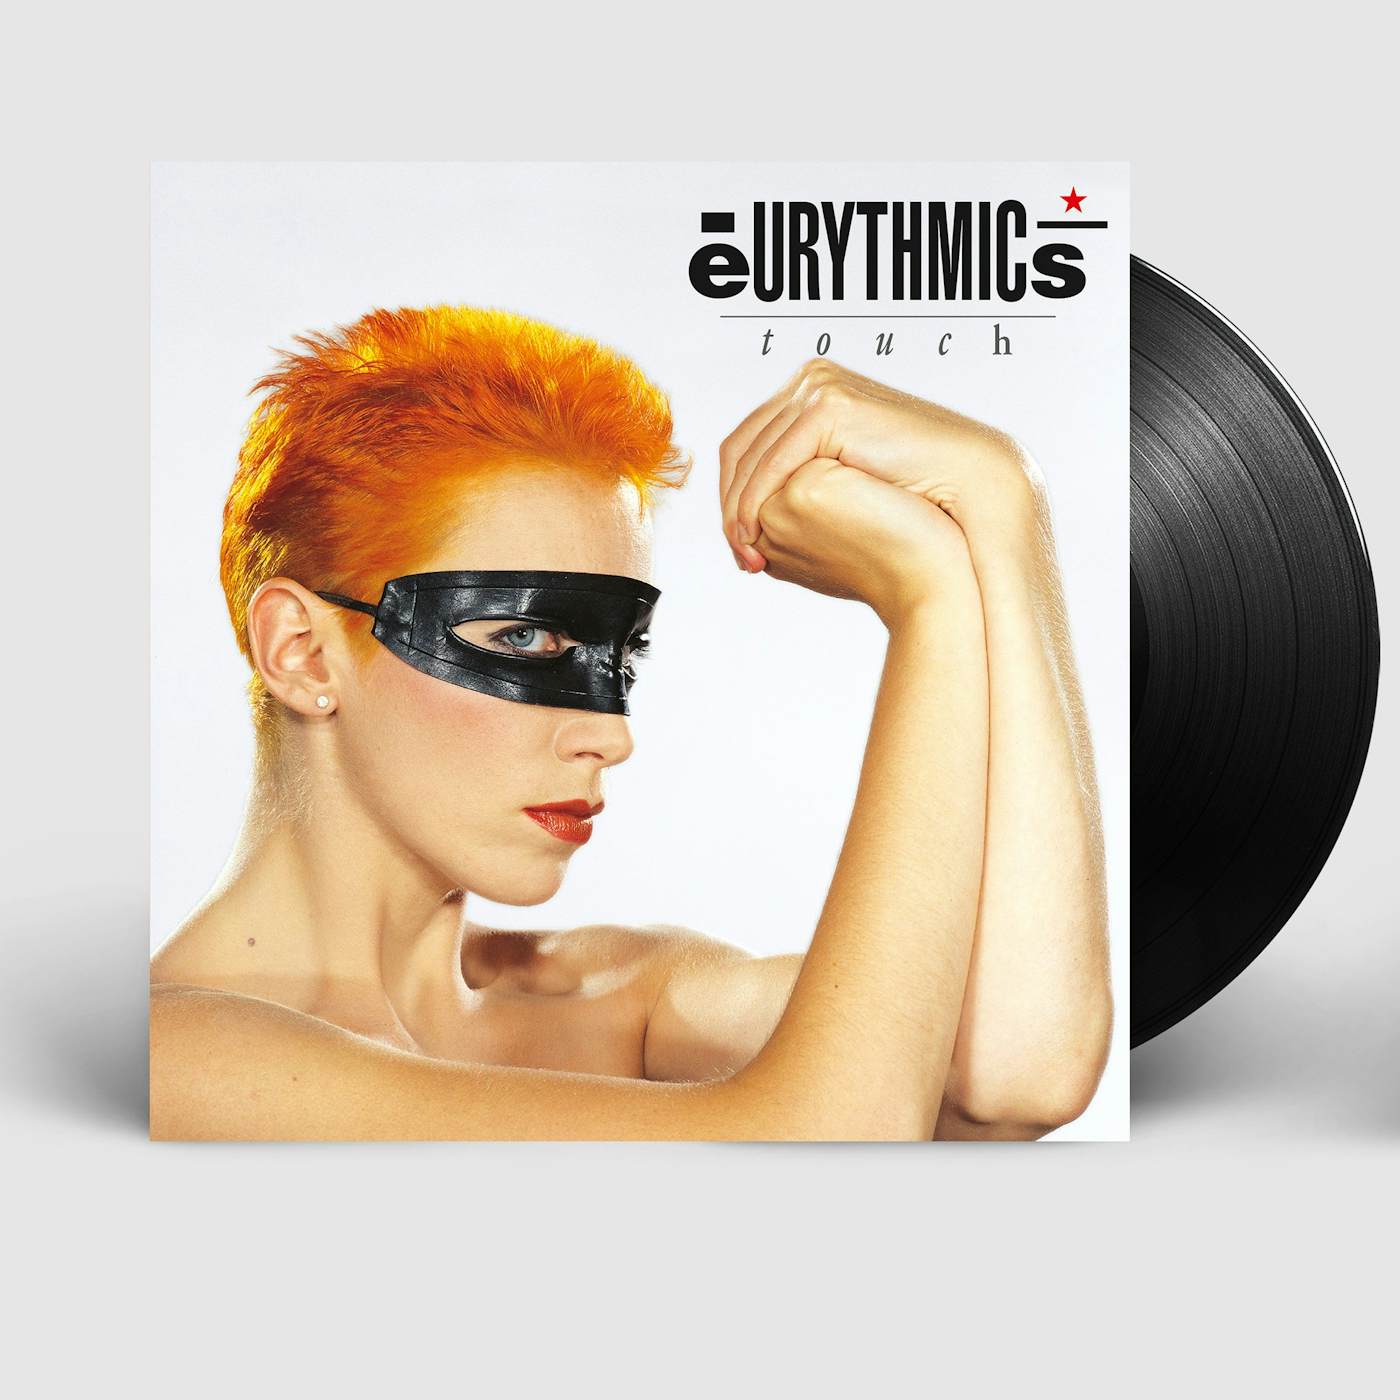 Eurythmics TOUCH LP (Vinyl)